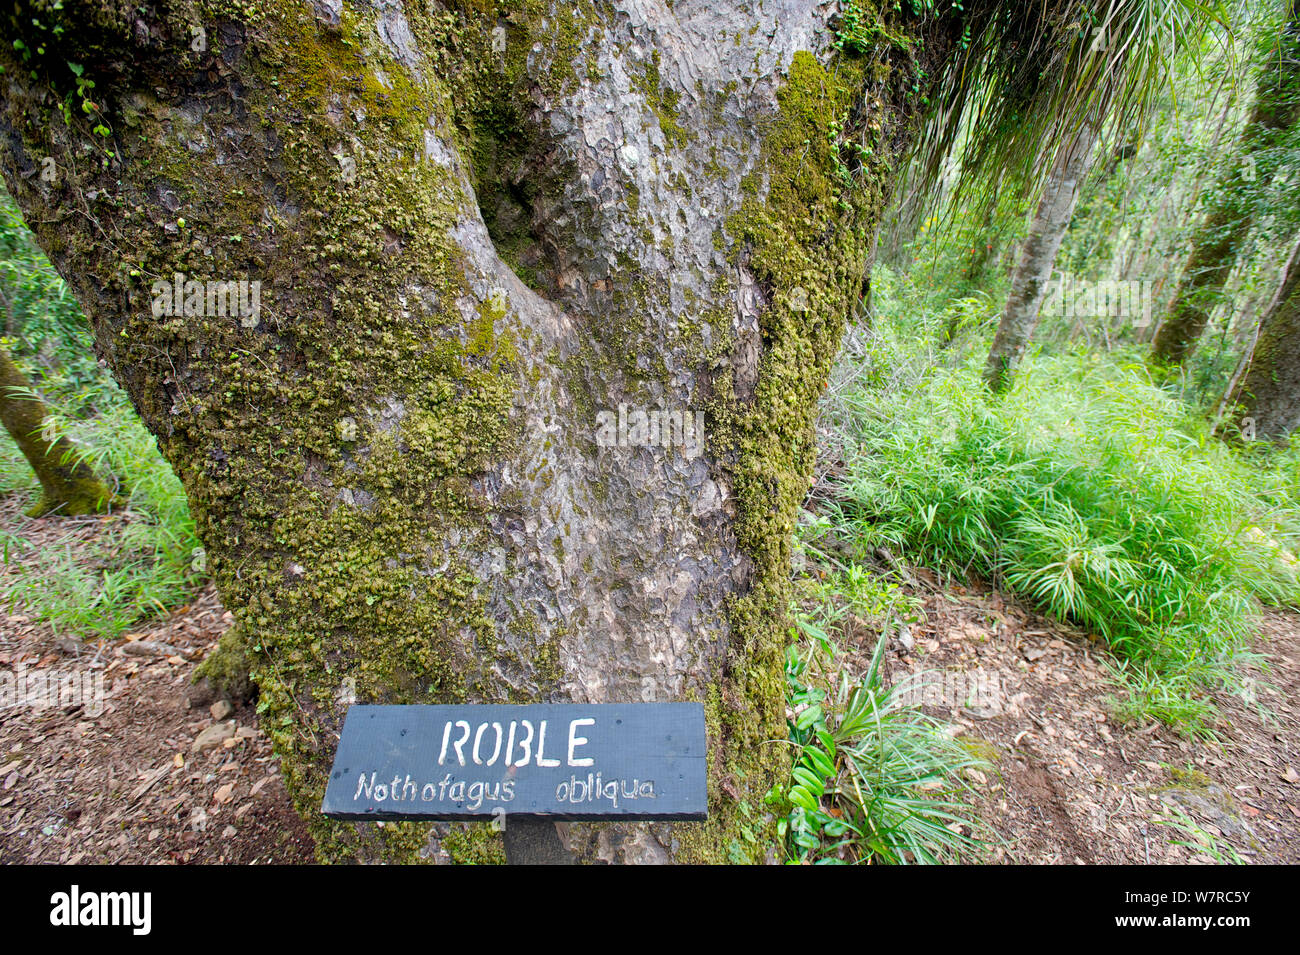 Roble tree (Nothofagus obliqua) Contulmo Monumento Naturale, Cile, Foto Stock